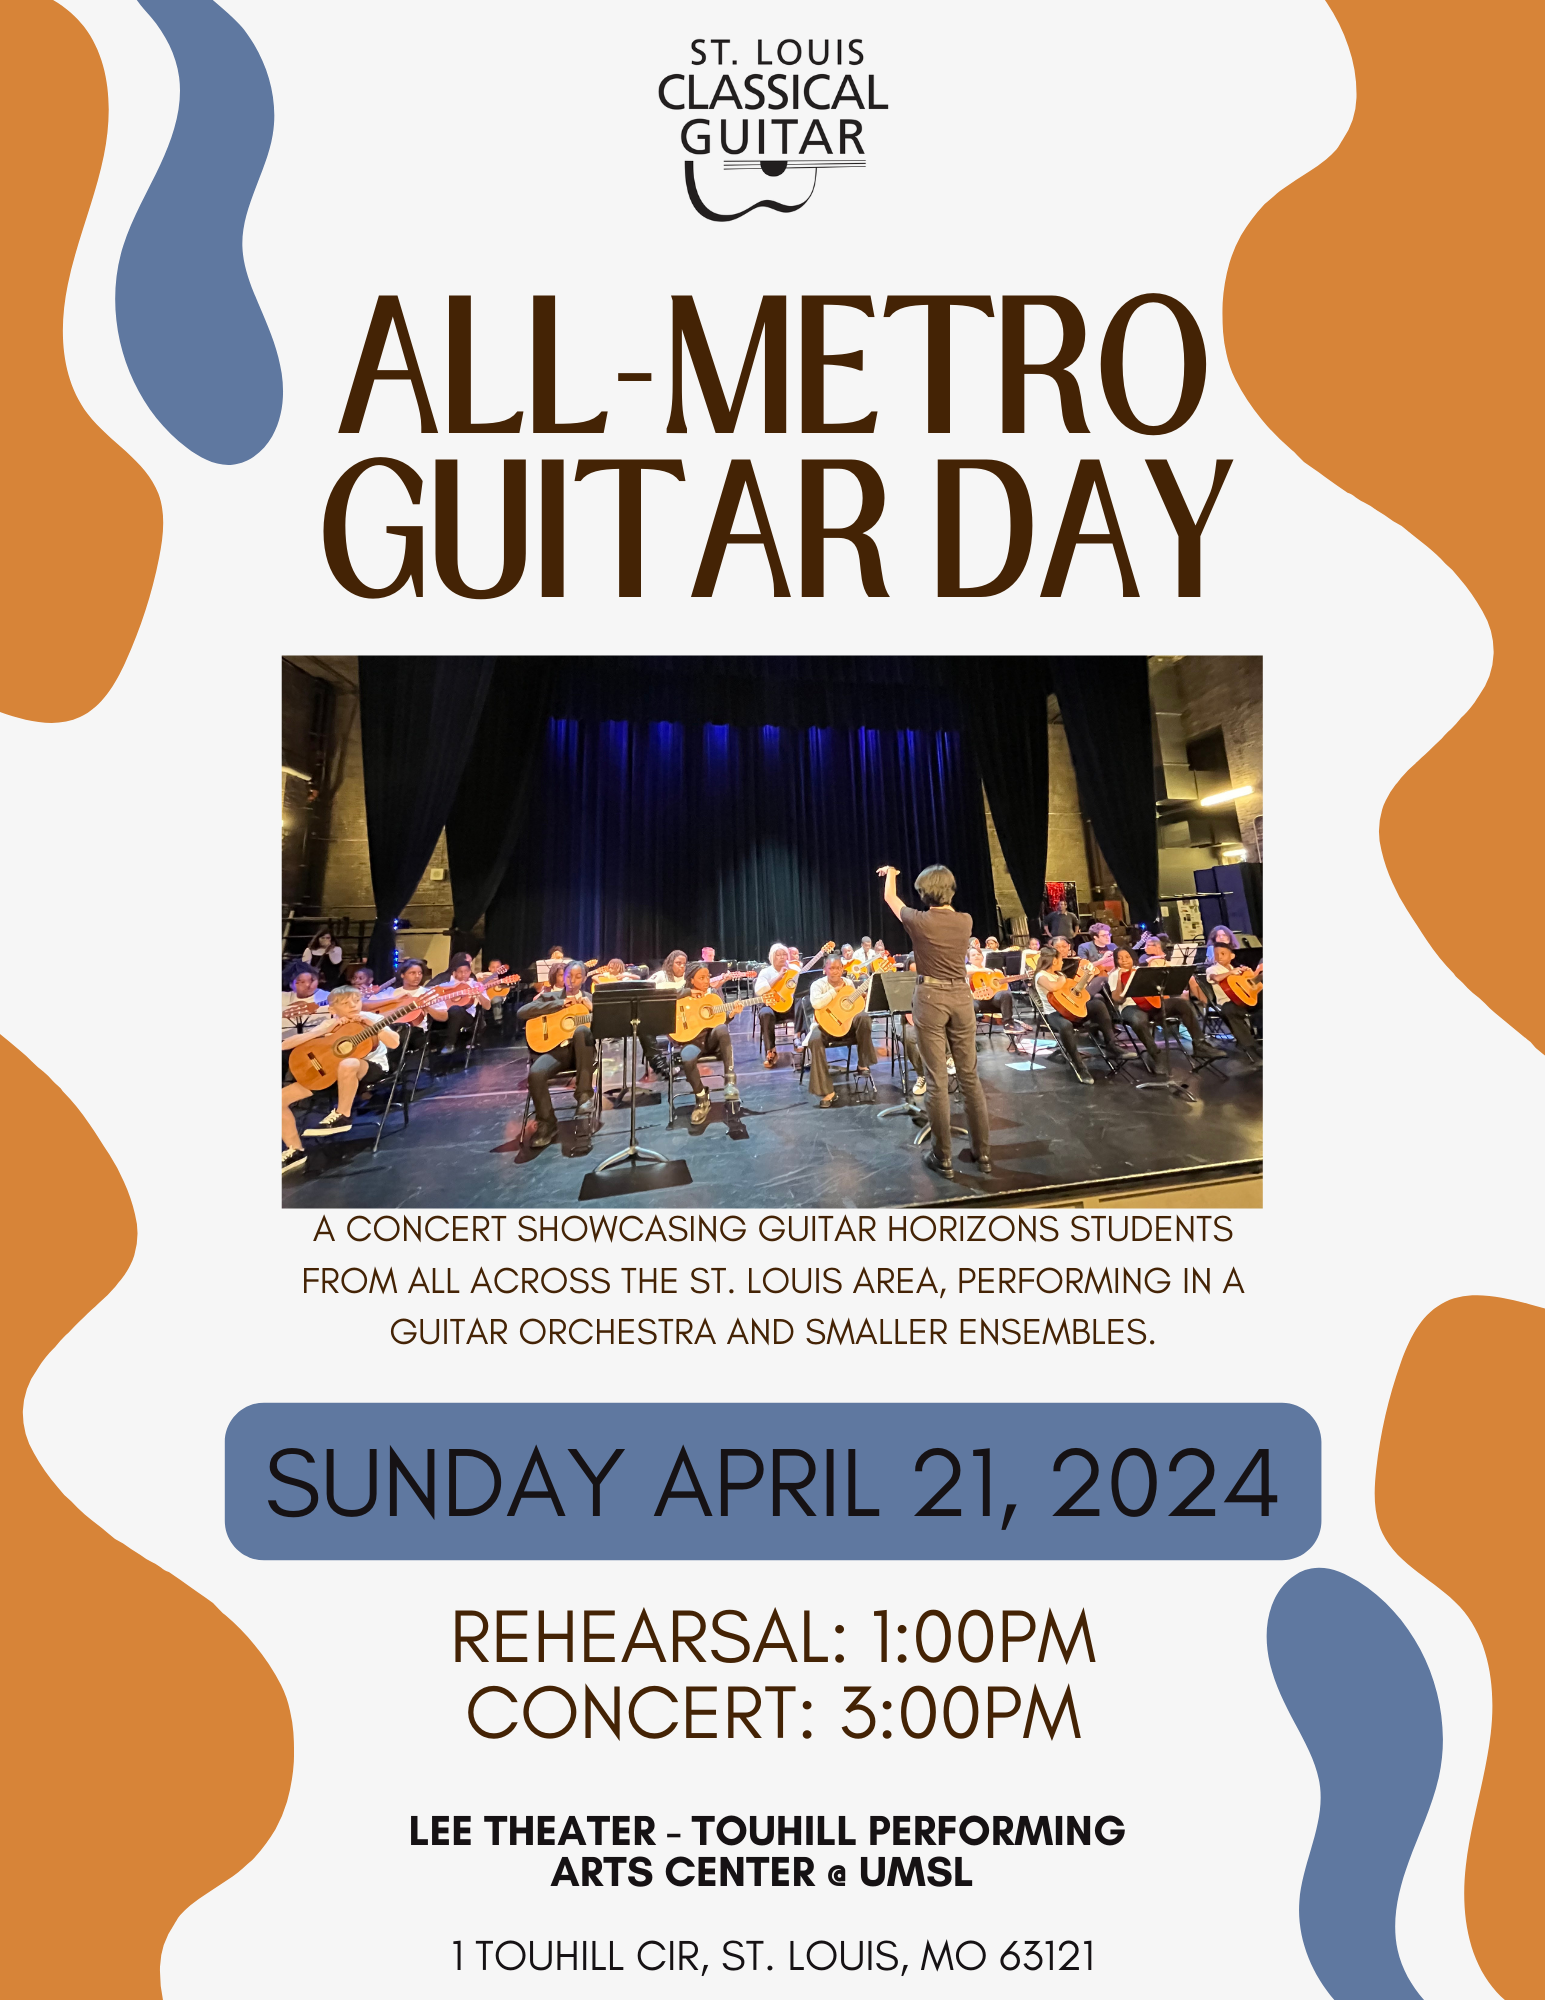 All-Metro Guitar Day